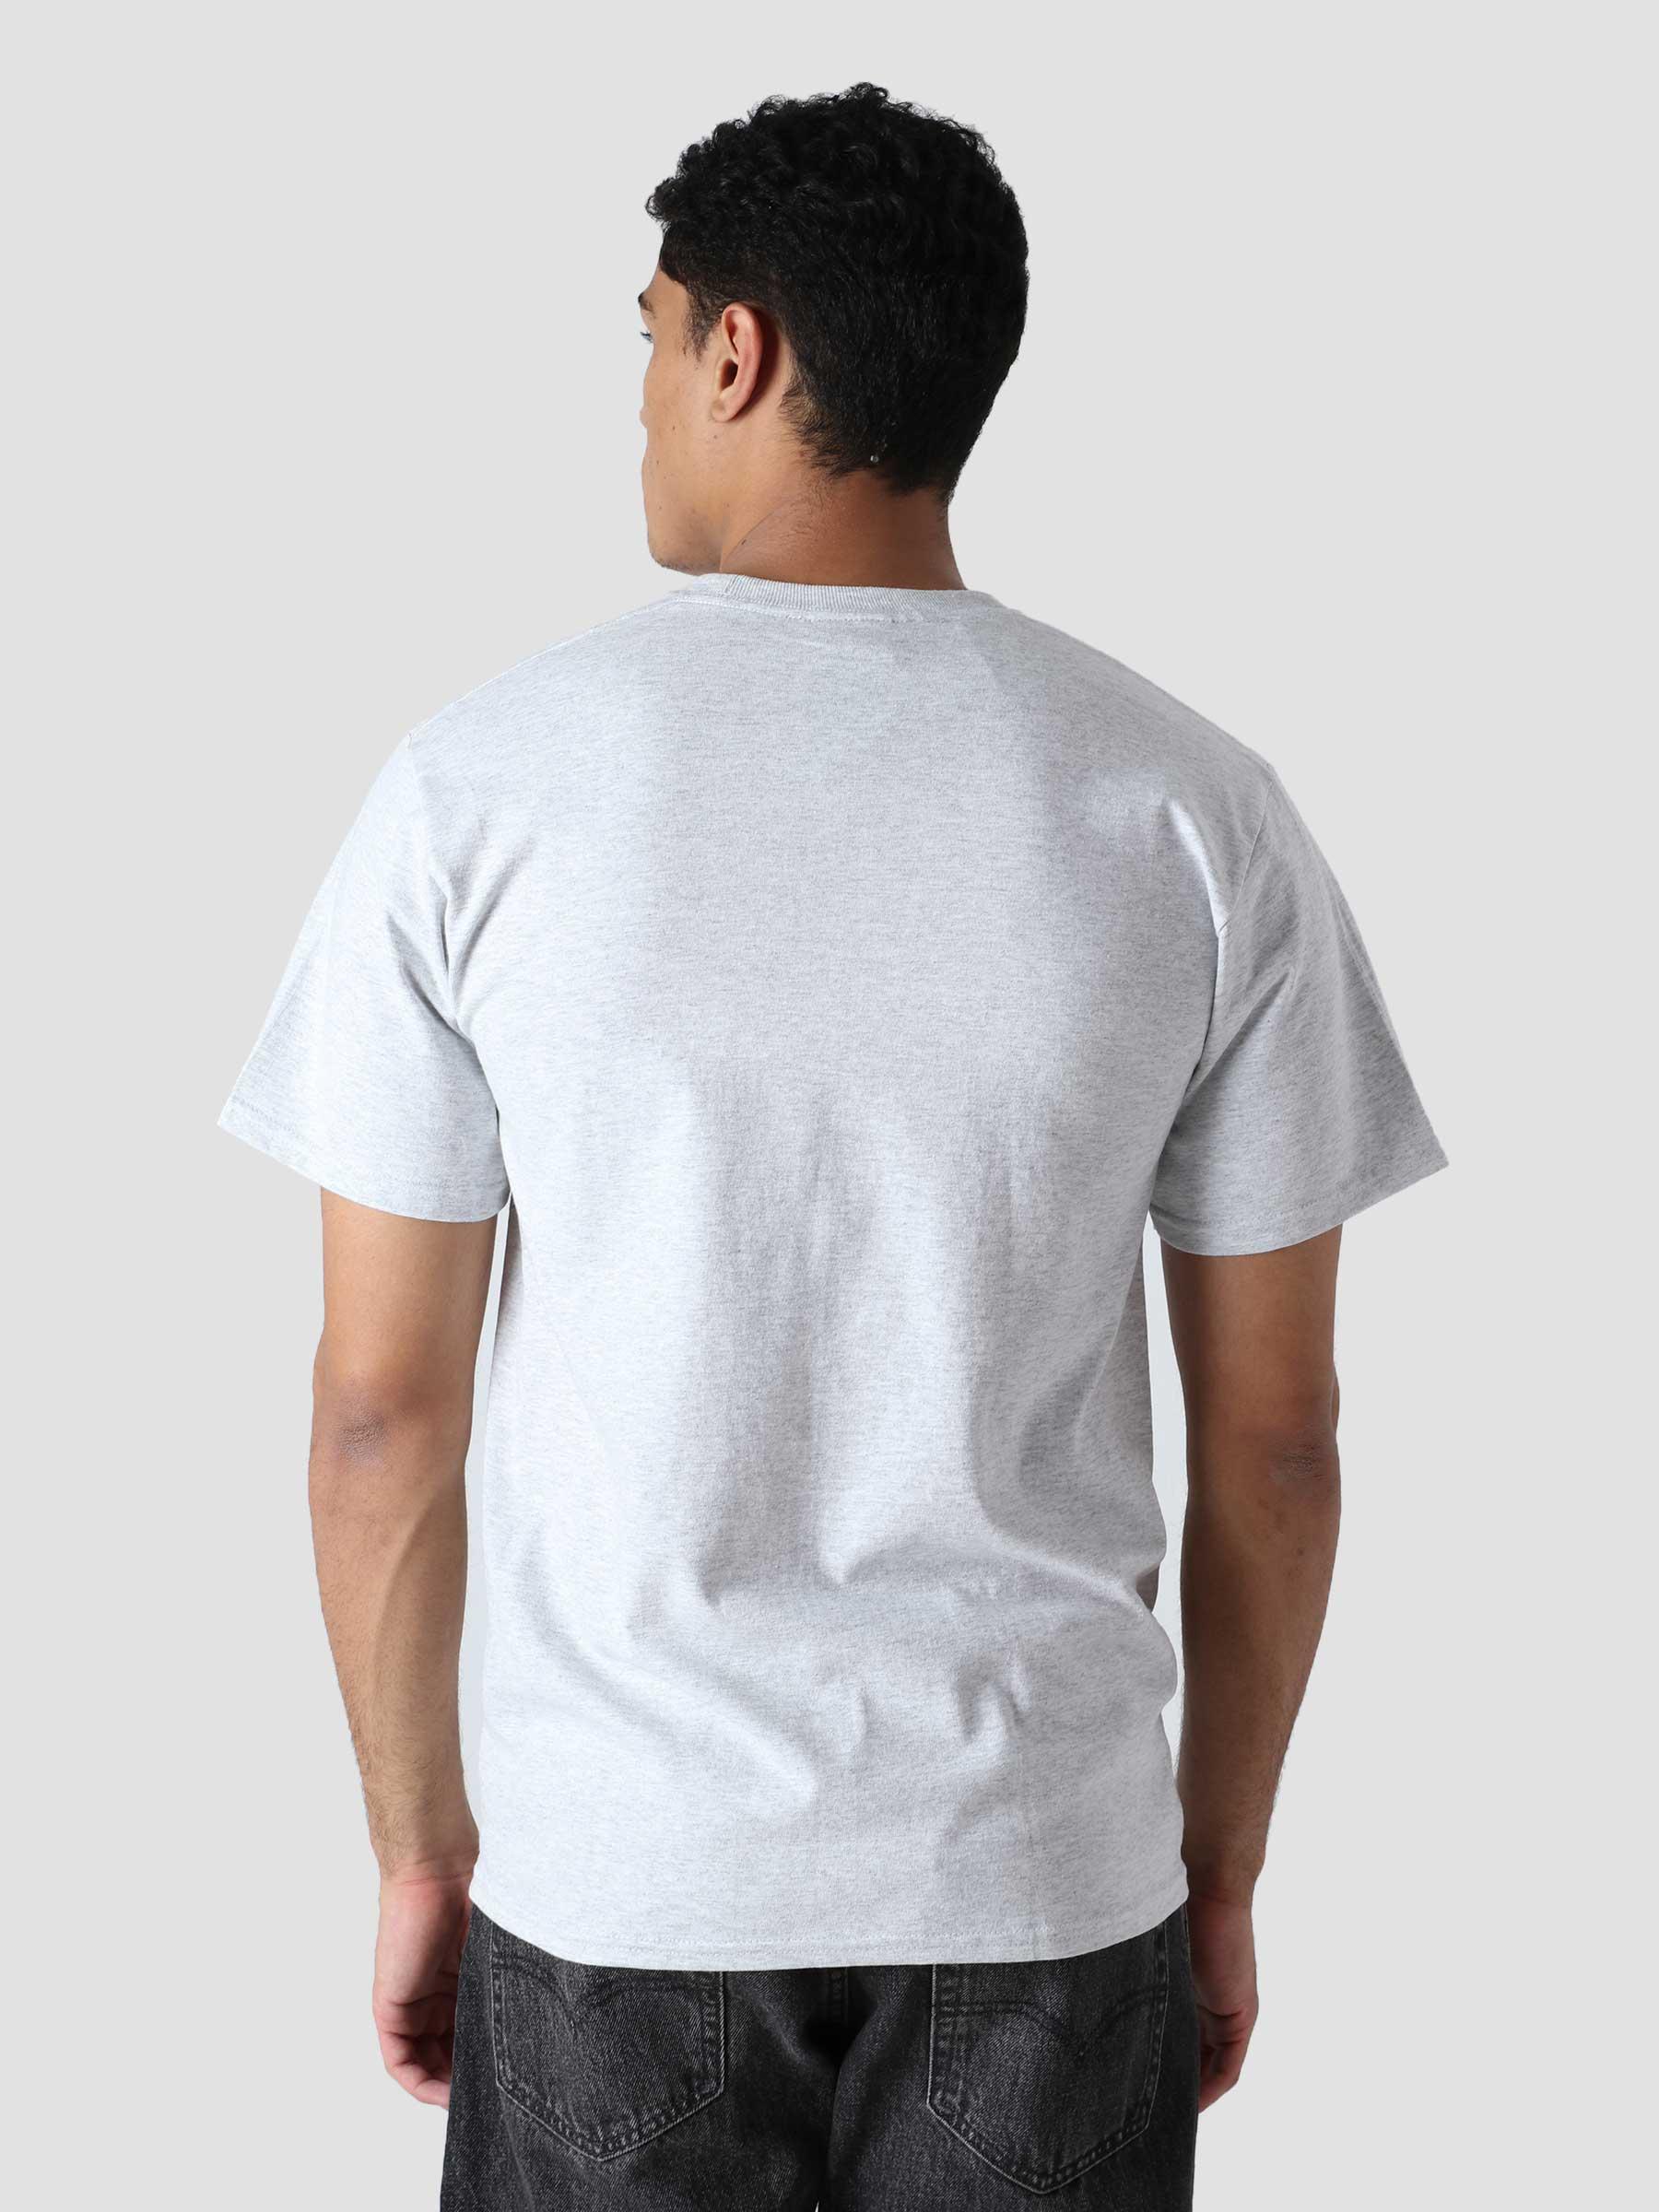 Ltd S/S T-Shirt Ash TS01580